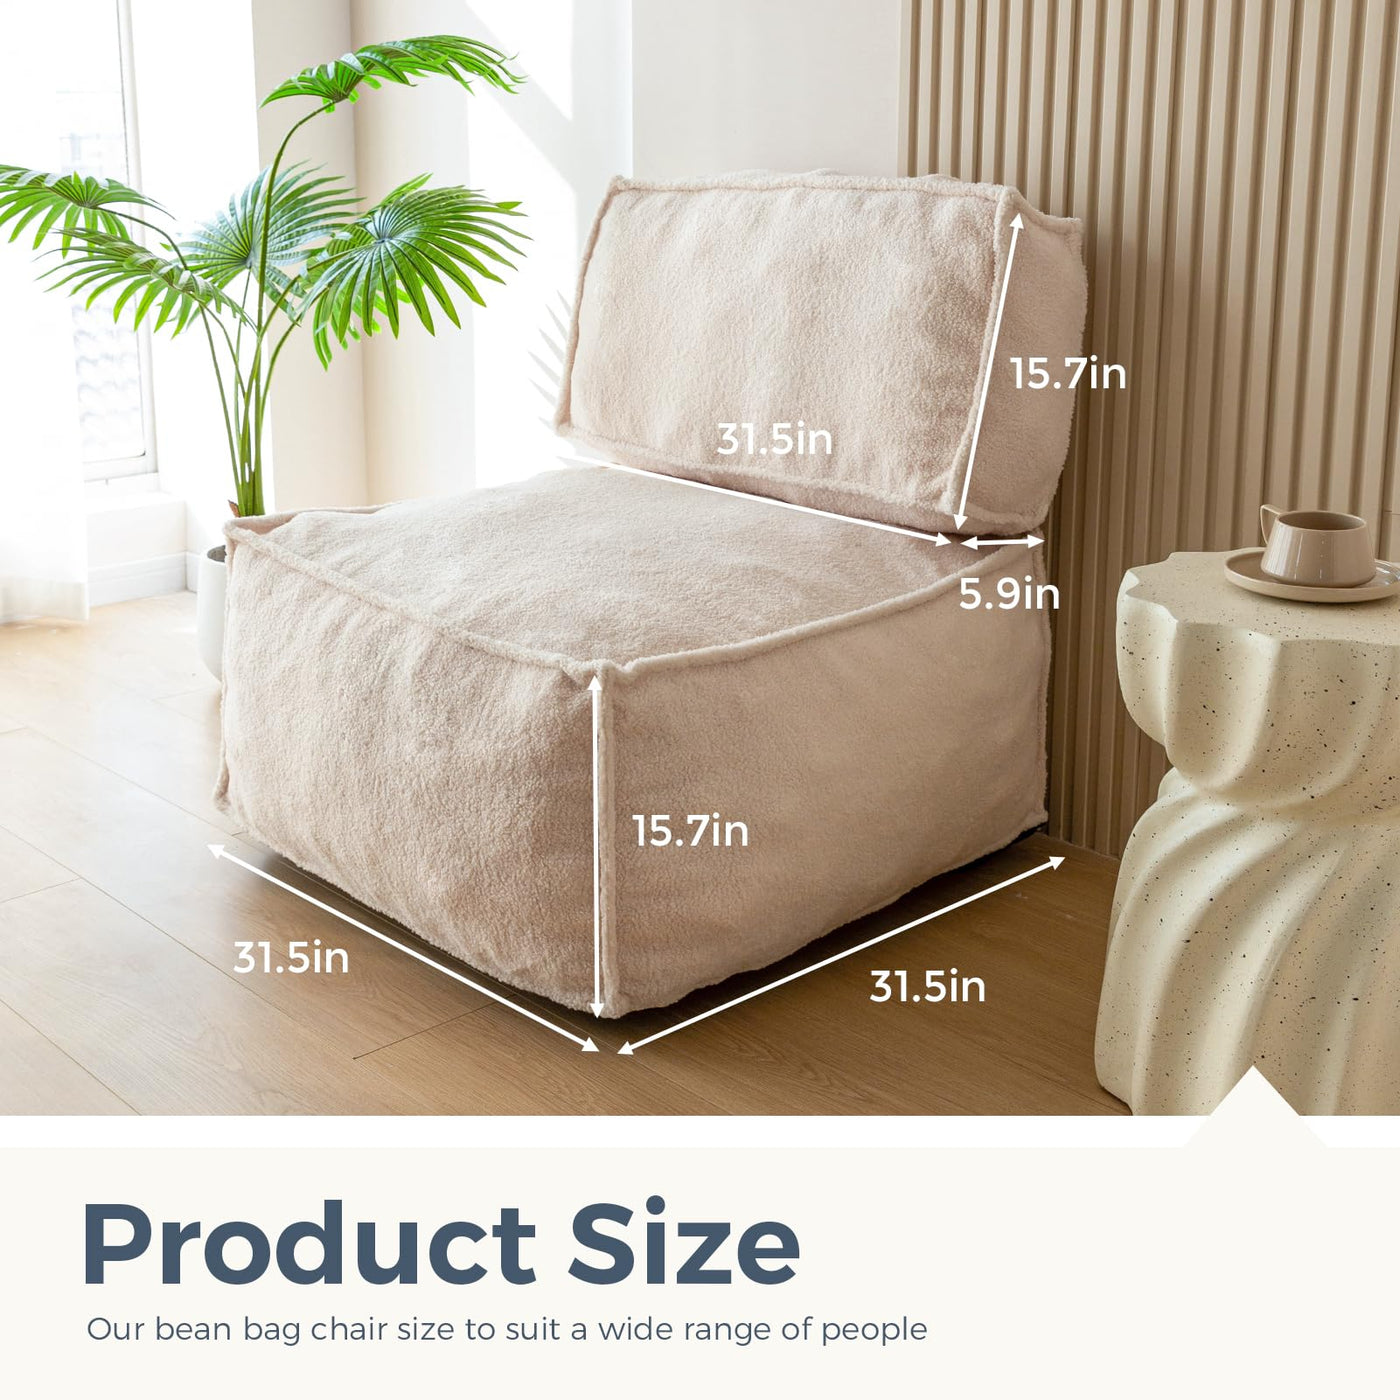 MAXYOYO 4 in 1 Modular Bean Bag Chair, Sherpa Bean Bag Floor Sofa Convertible Floor Cushion, Floor Pouf (Beige)